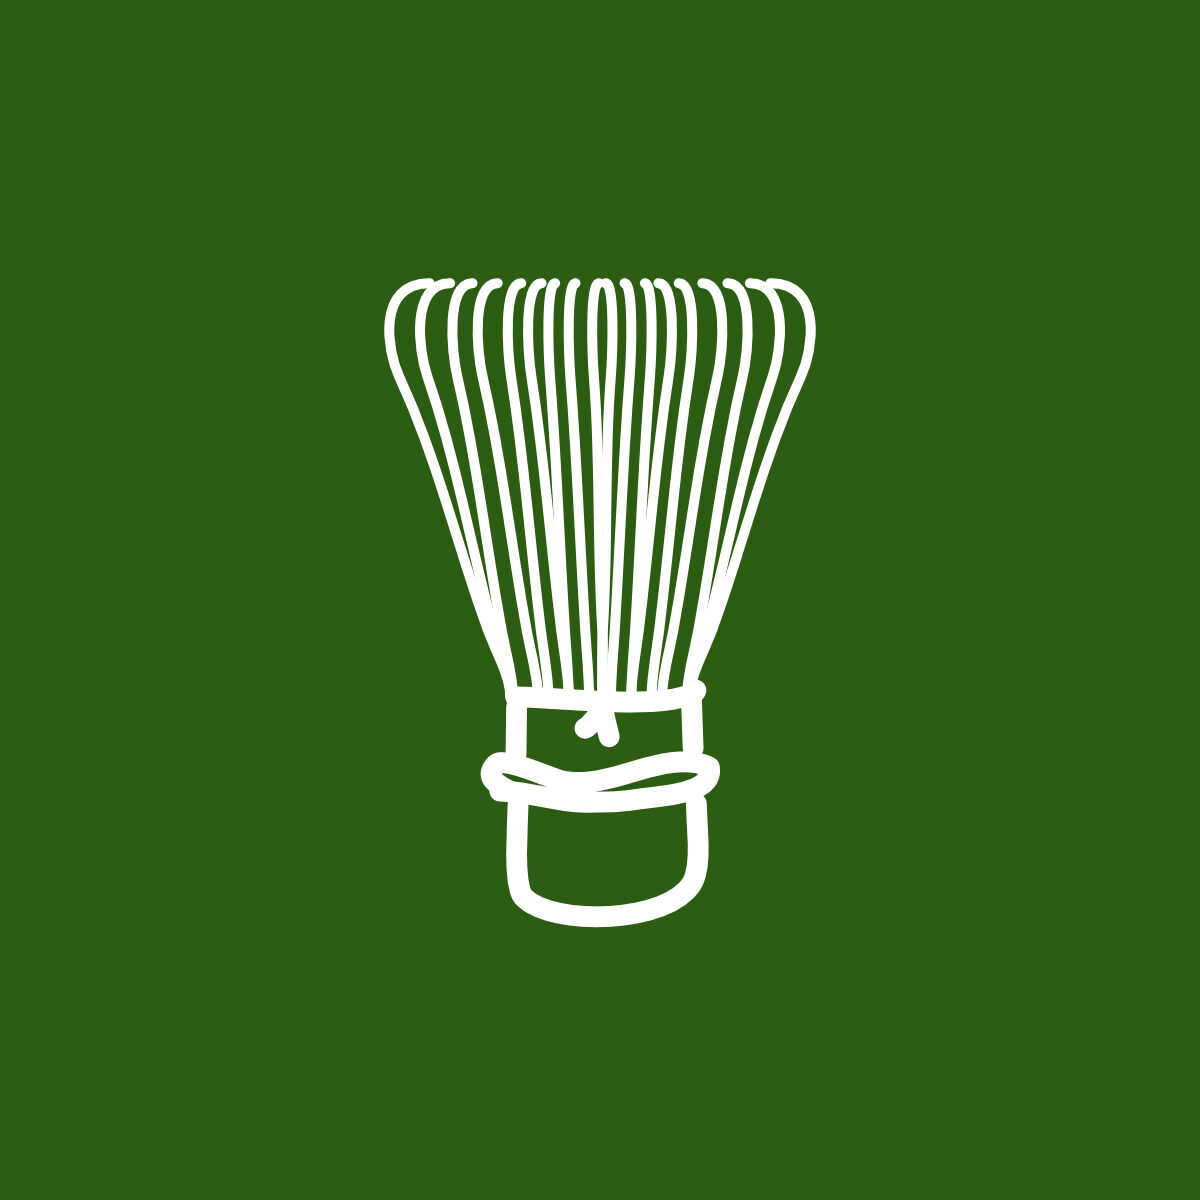 Matcha whisk icon on green background.